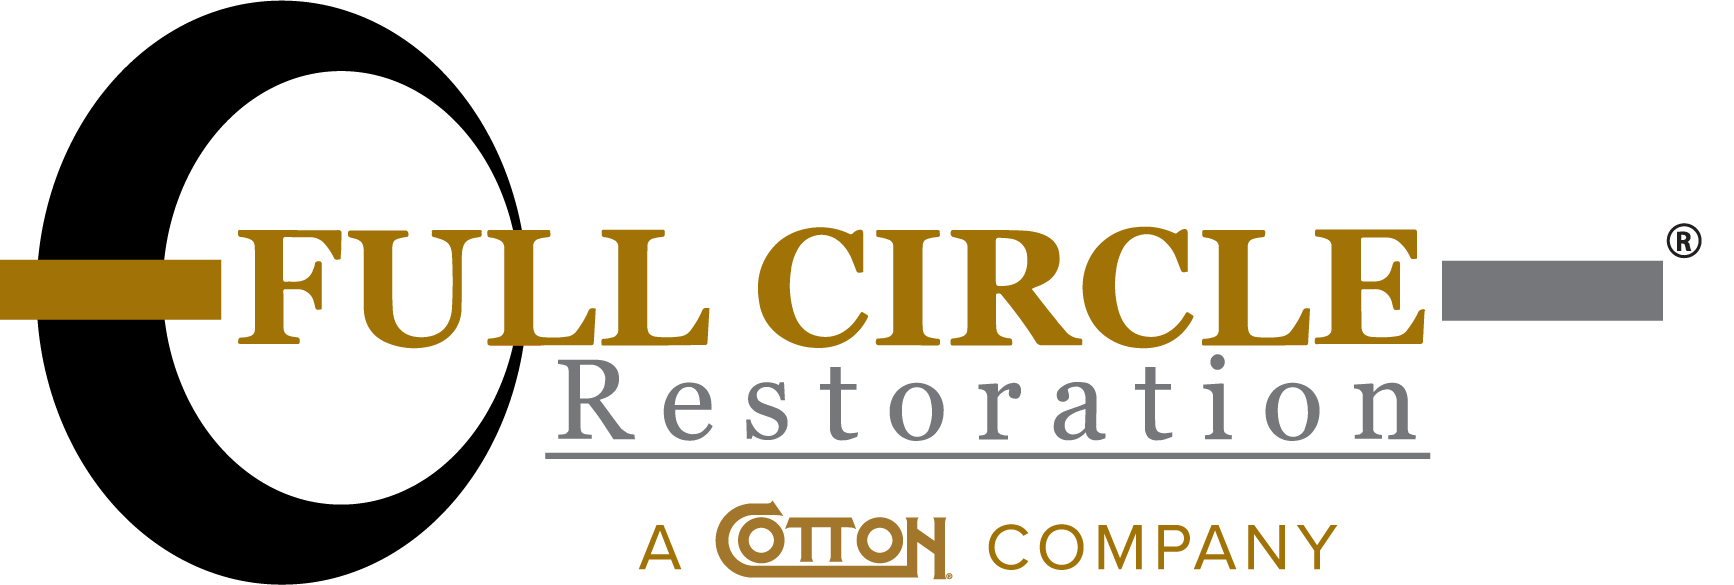 Full Circle Restoration